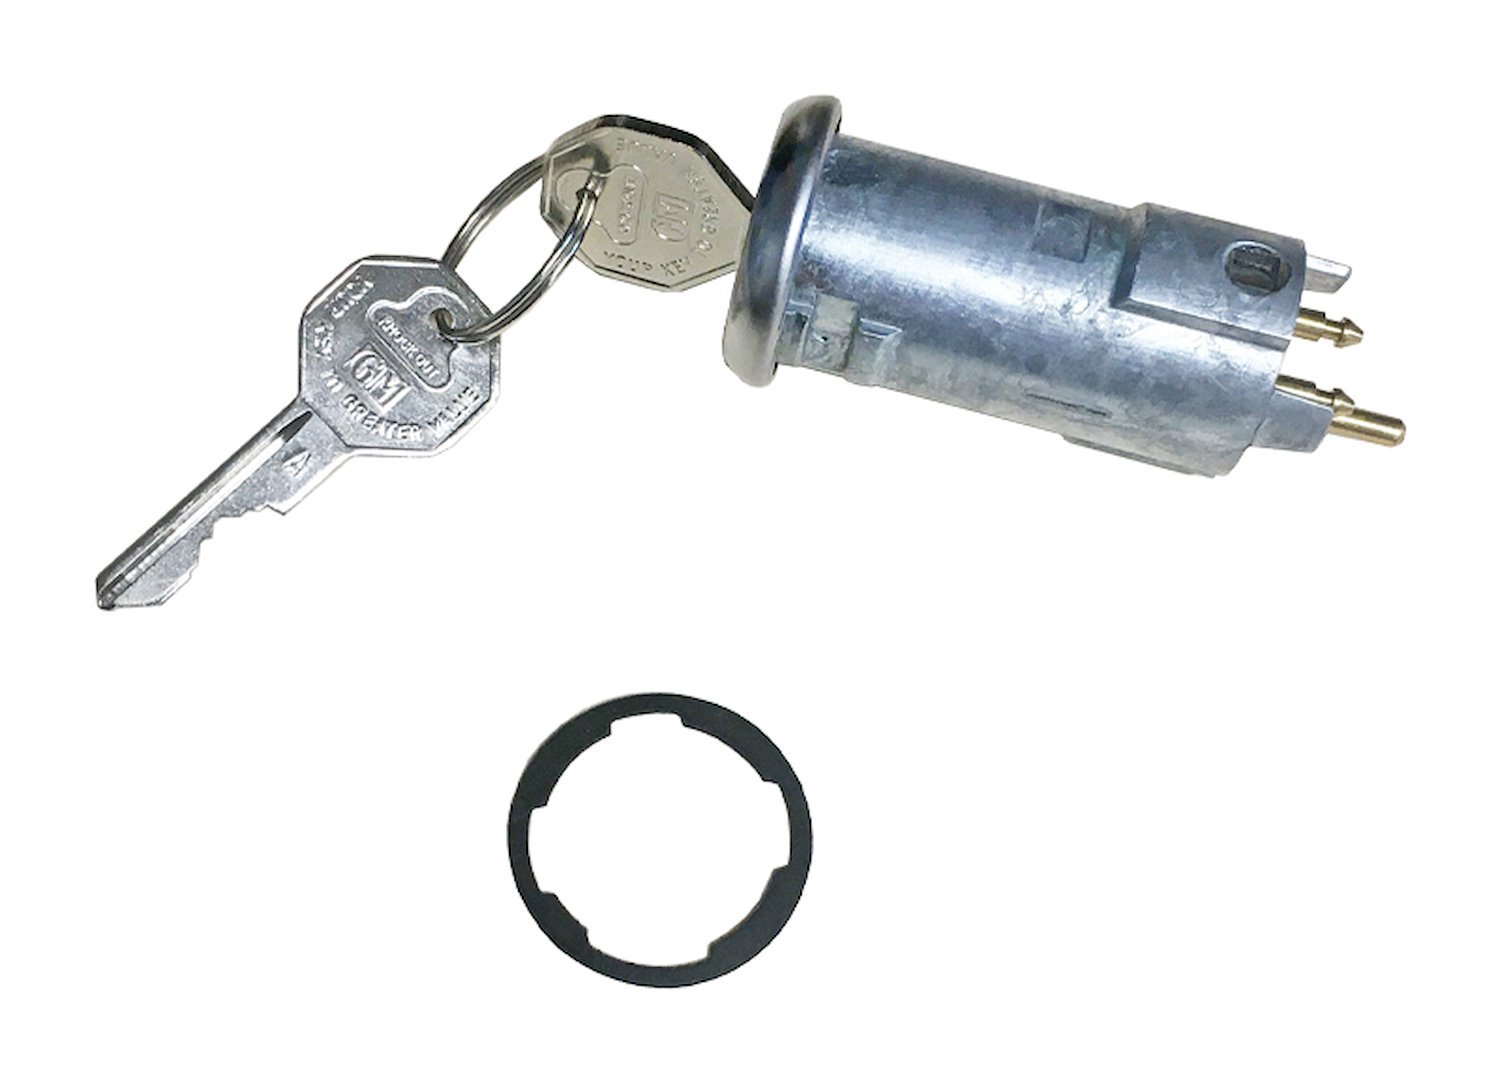 Electric Tailgate Lock Fits Select 1973-1991 GM Models [Original Octagon Keys]